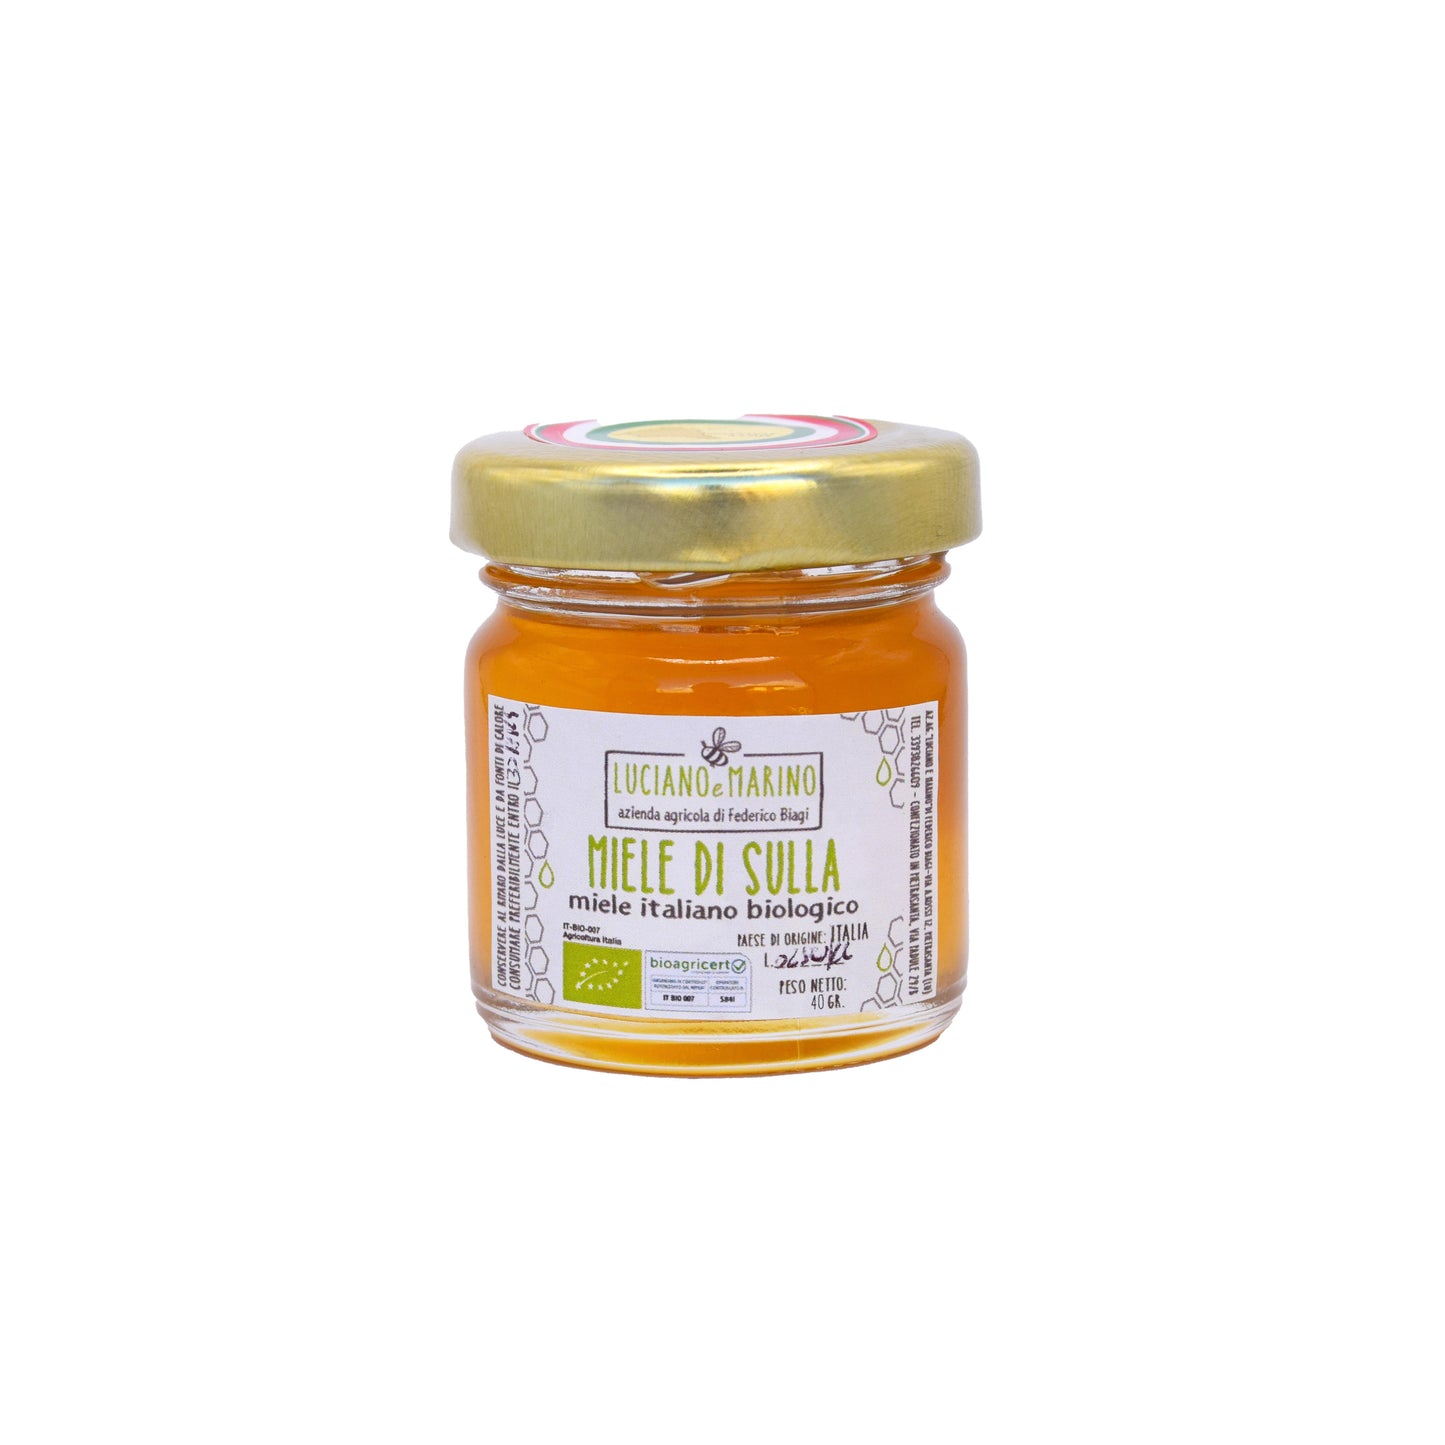 Organic Sulla honey - 40g